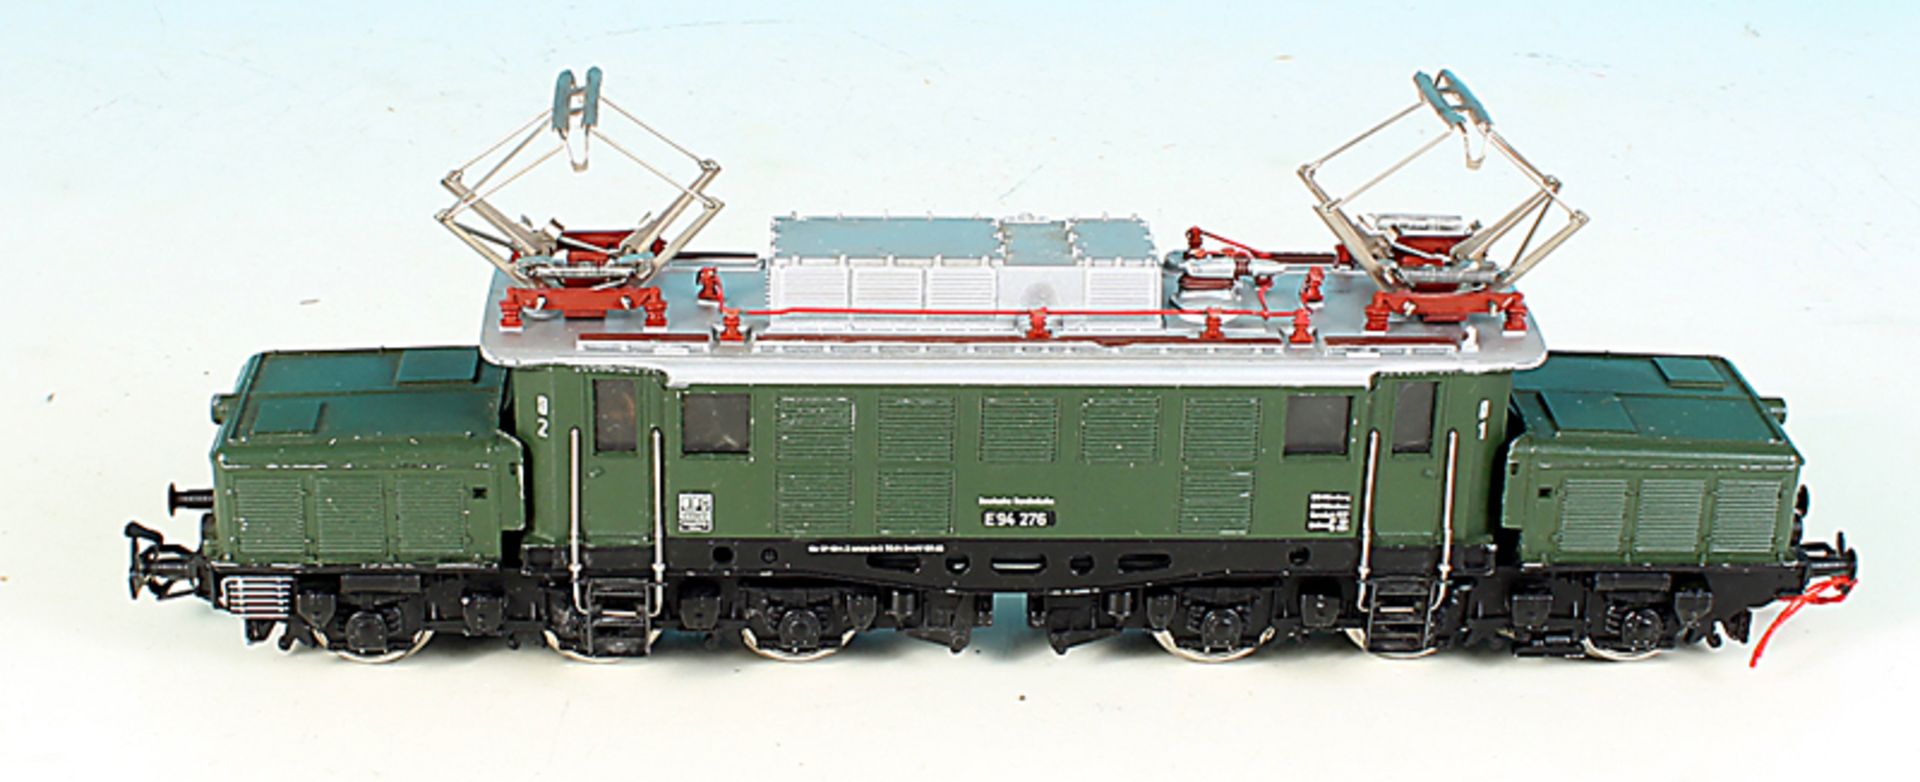 MÄRKLIN E-Lok E 94 276 -  Spur H0